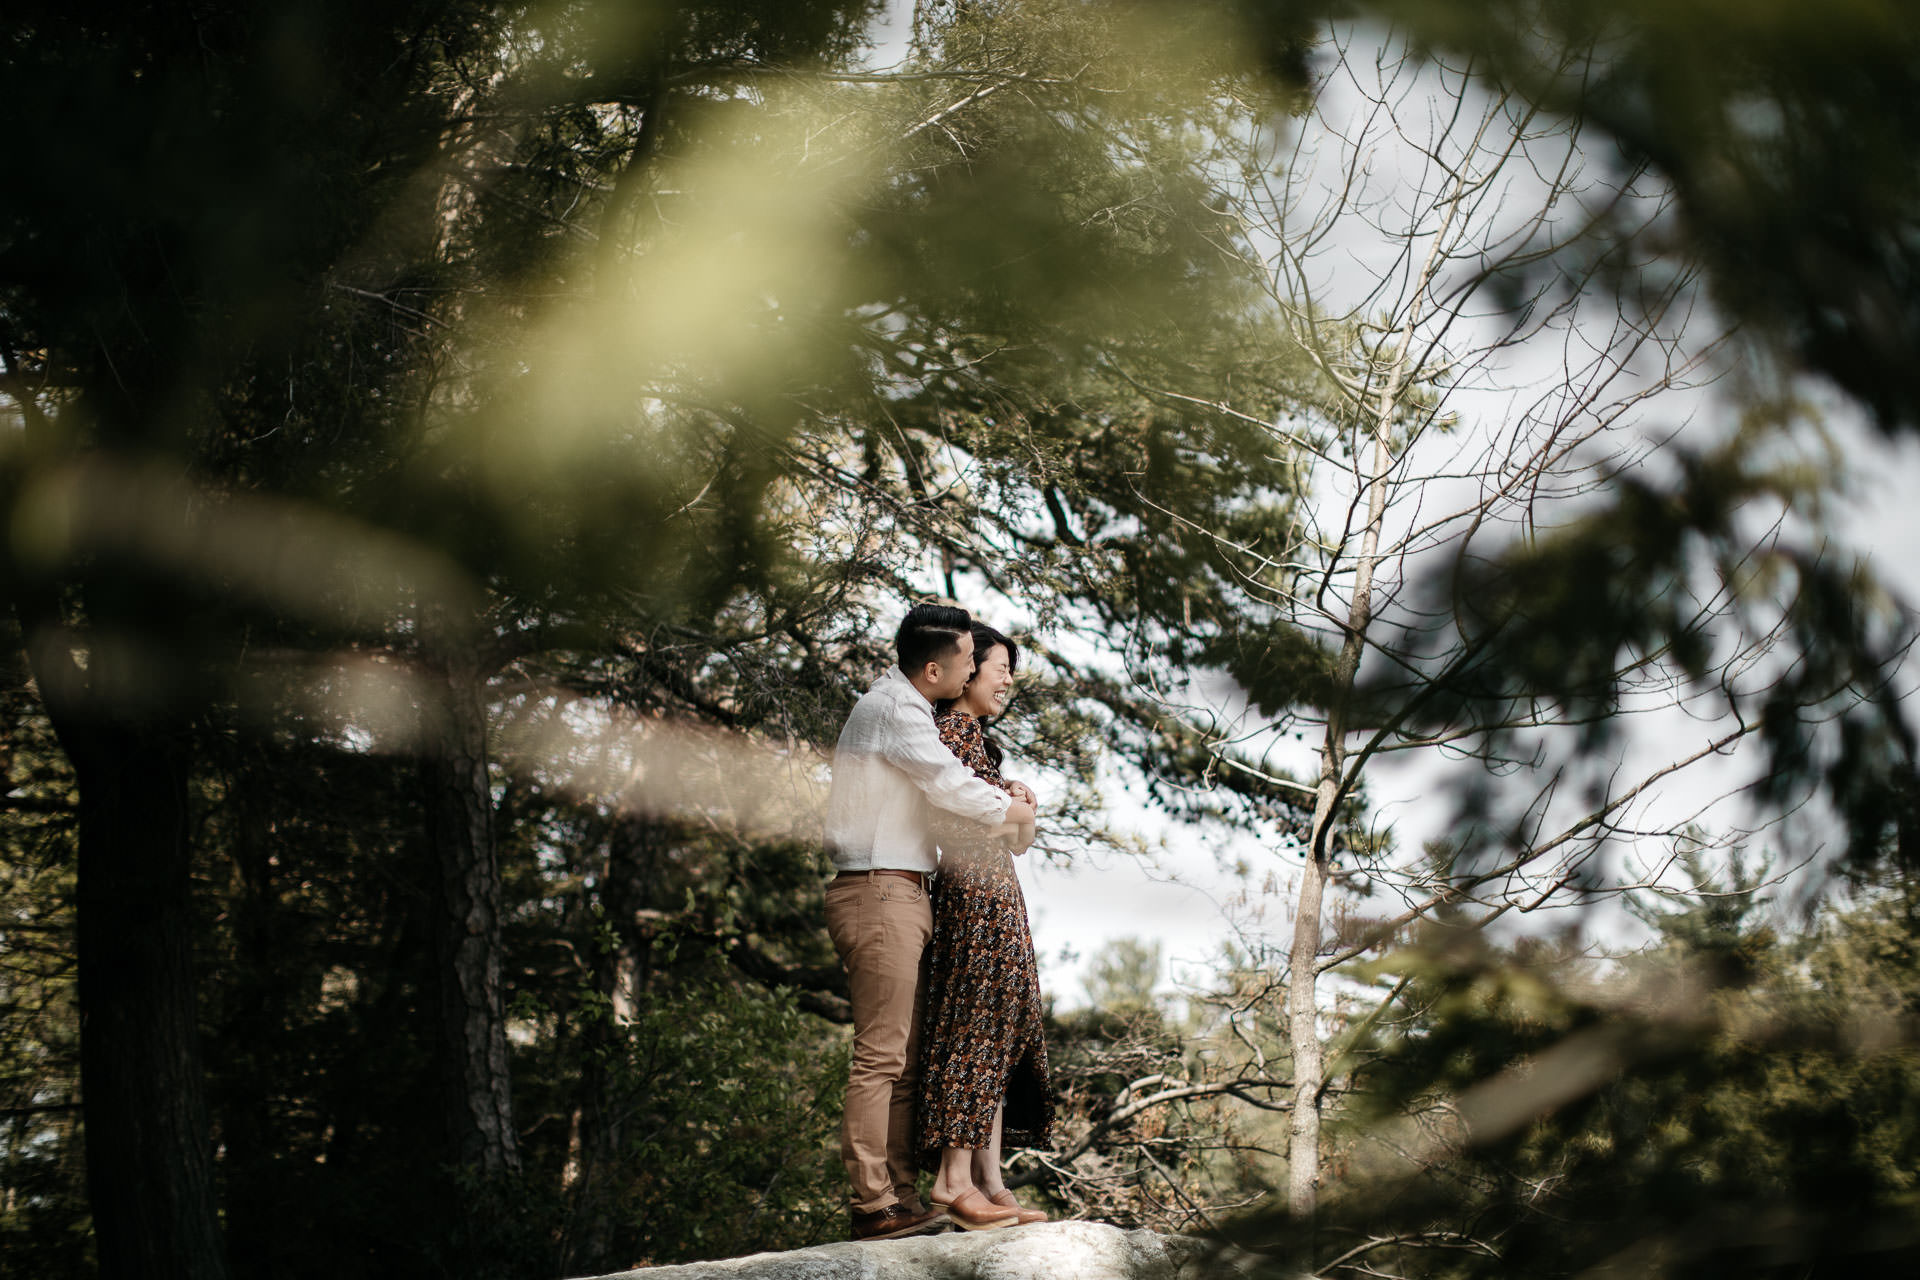 Jinie & Peter's Engagement in Catskills Minnewaska State Park, New York, by Jean-Laurent Gaudy